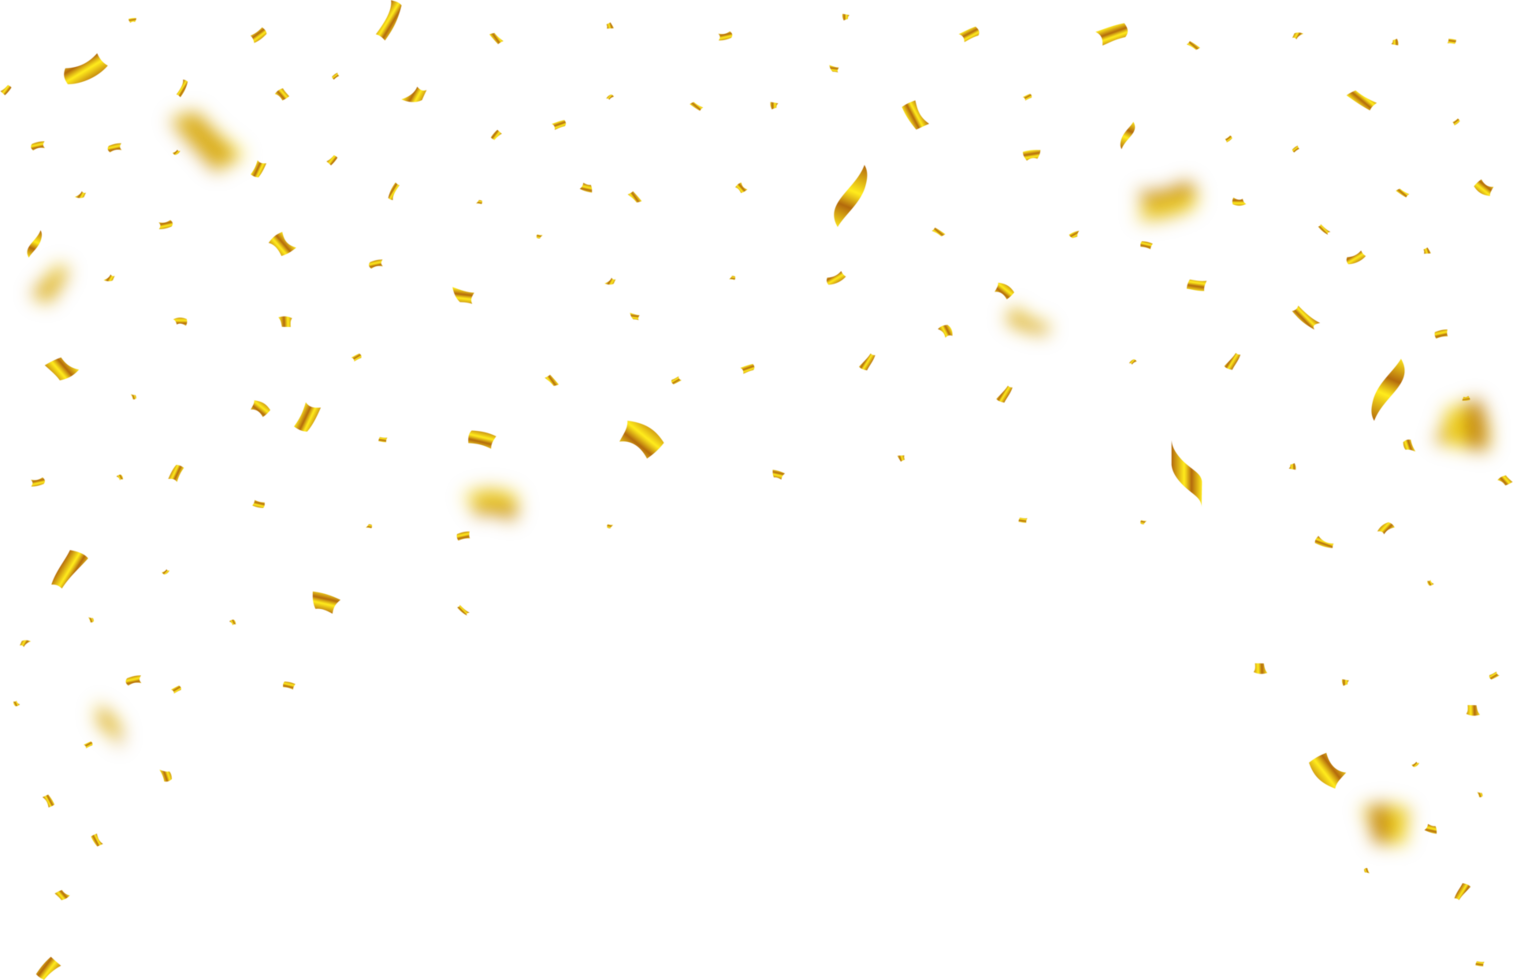 gyllene konfetti faller isolerat på en transparent bakgrund. karneval element. konfetti png illustration för festival bakgrund. gyllene fest glitter och konfetti faller. årsdag firande.